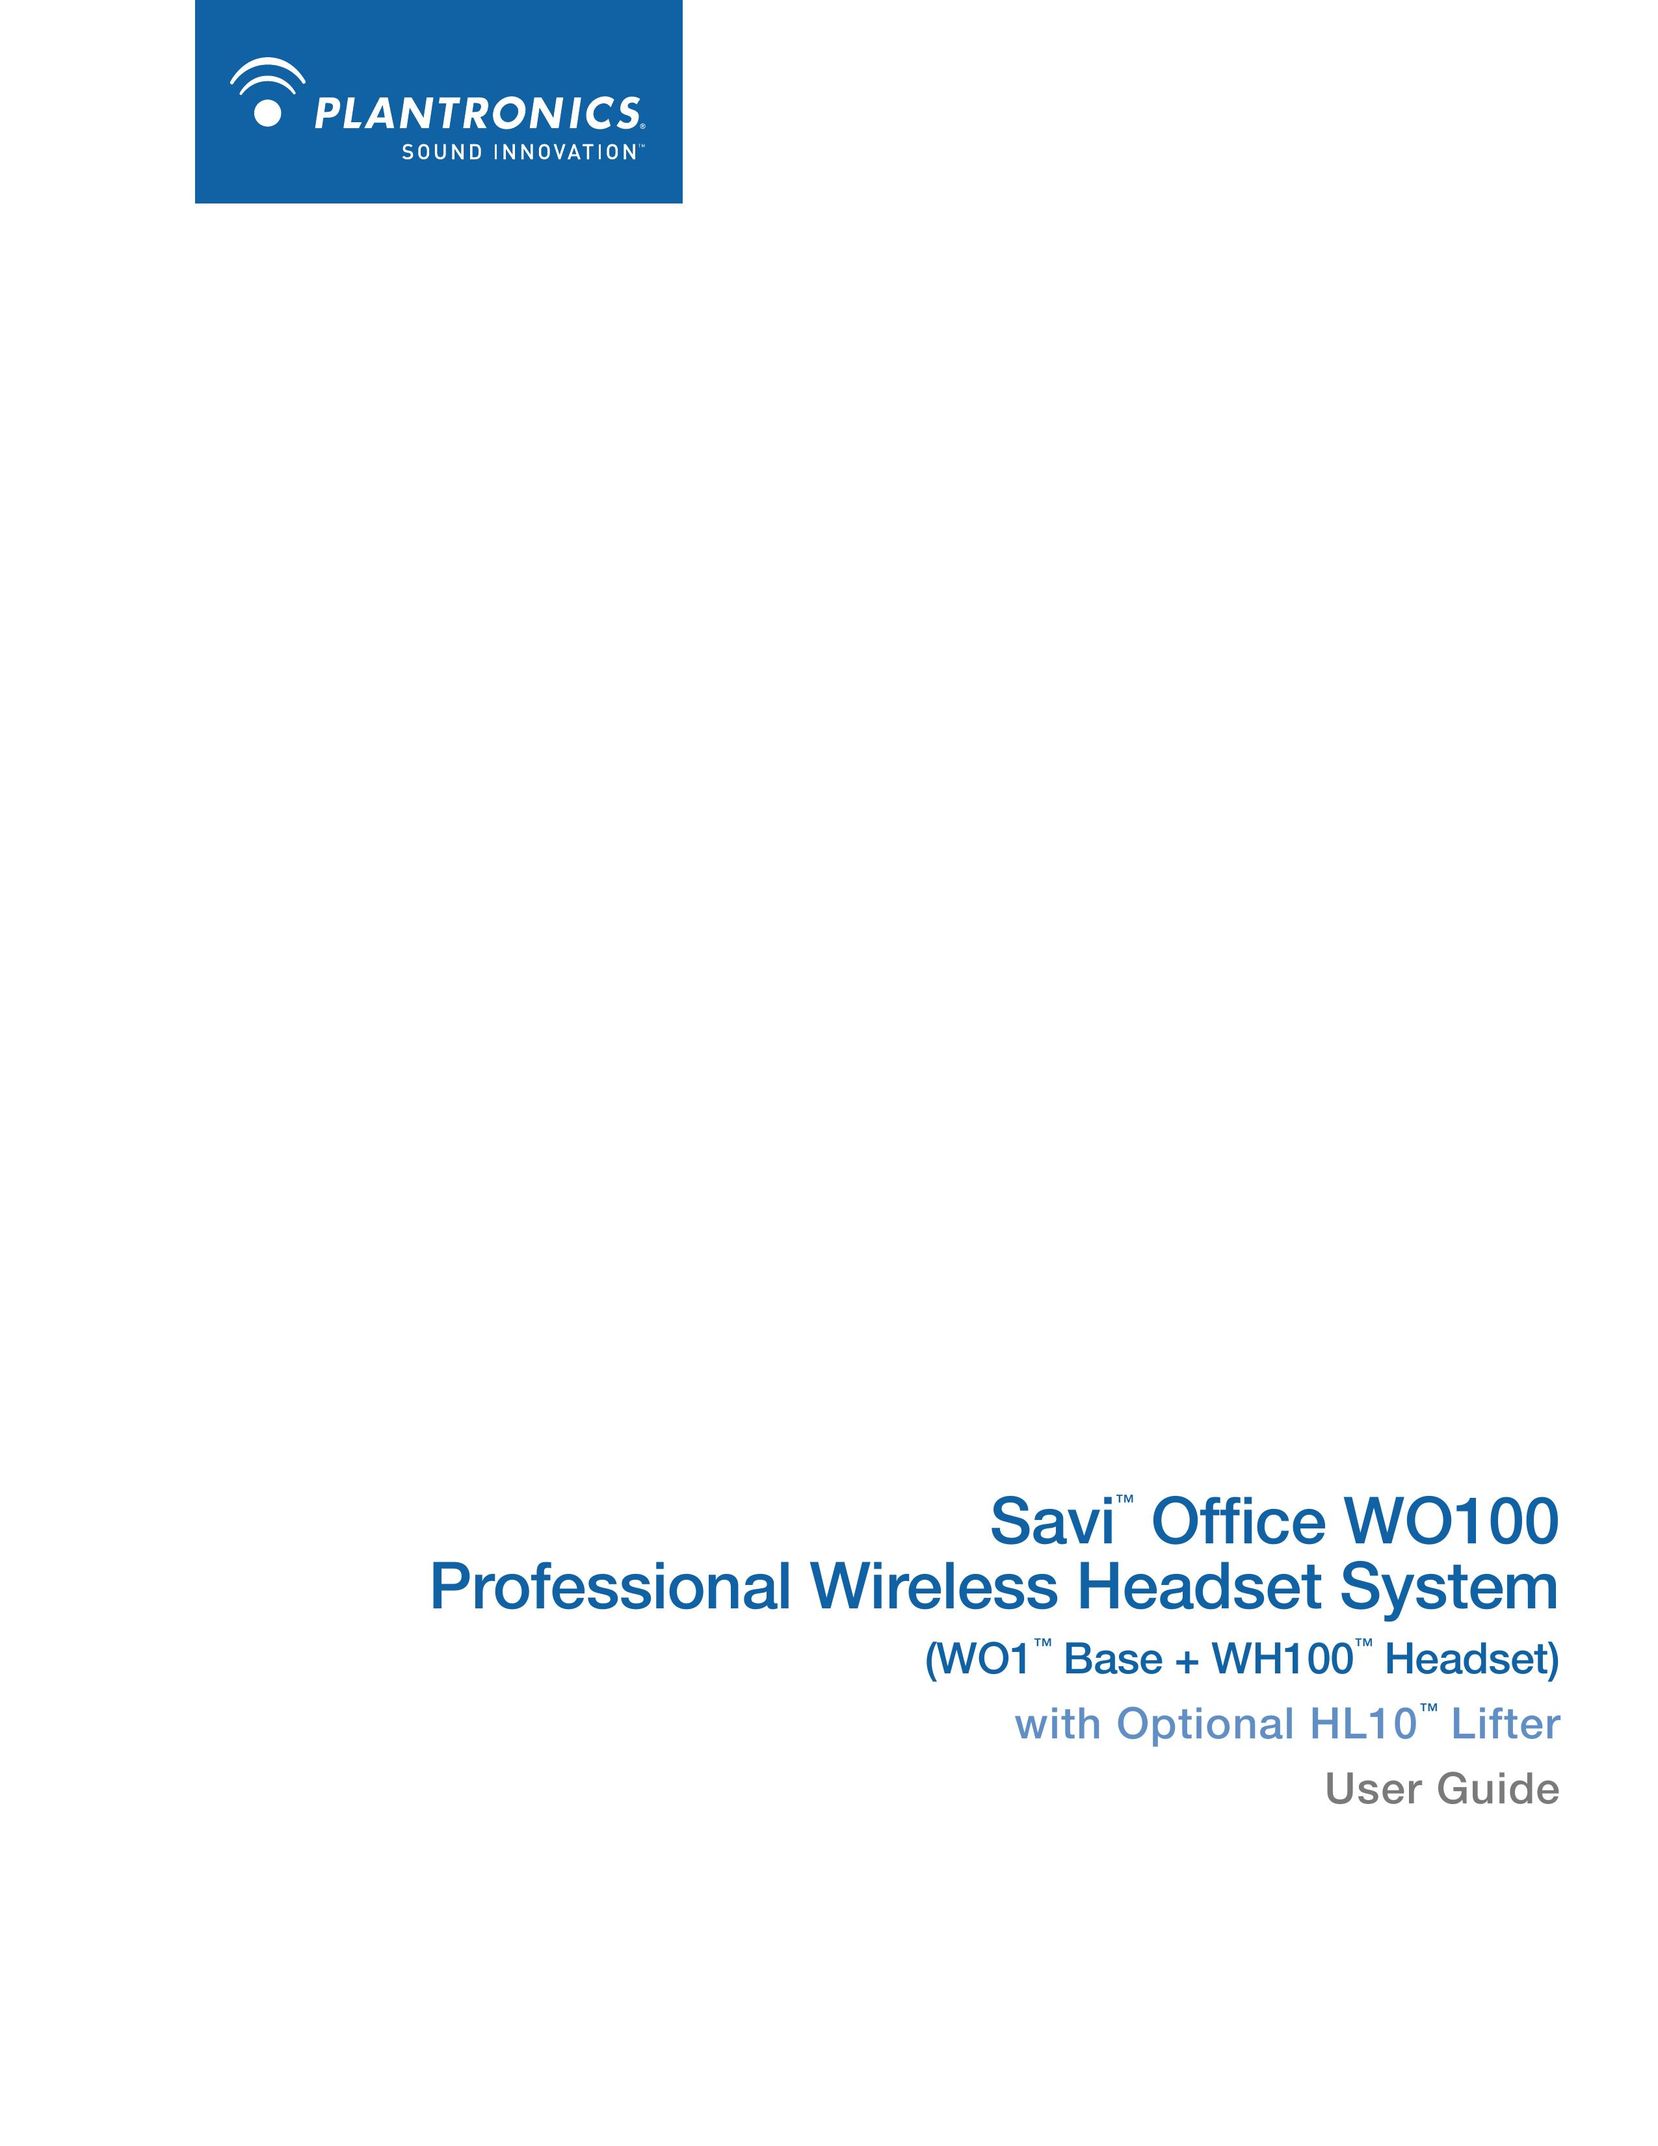 Plantronics WO100 Wireless Office Headset User Manual